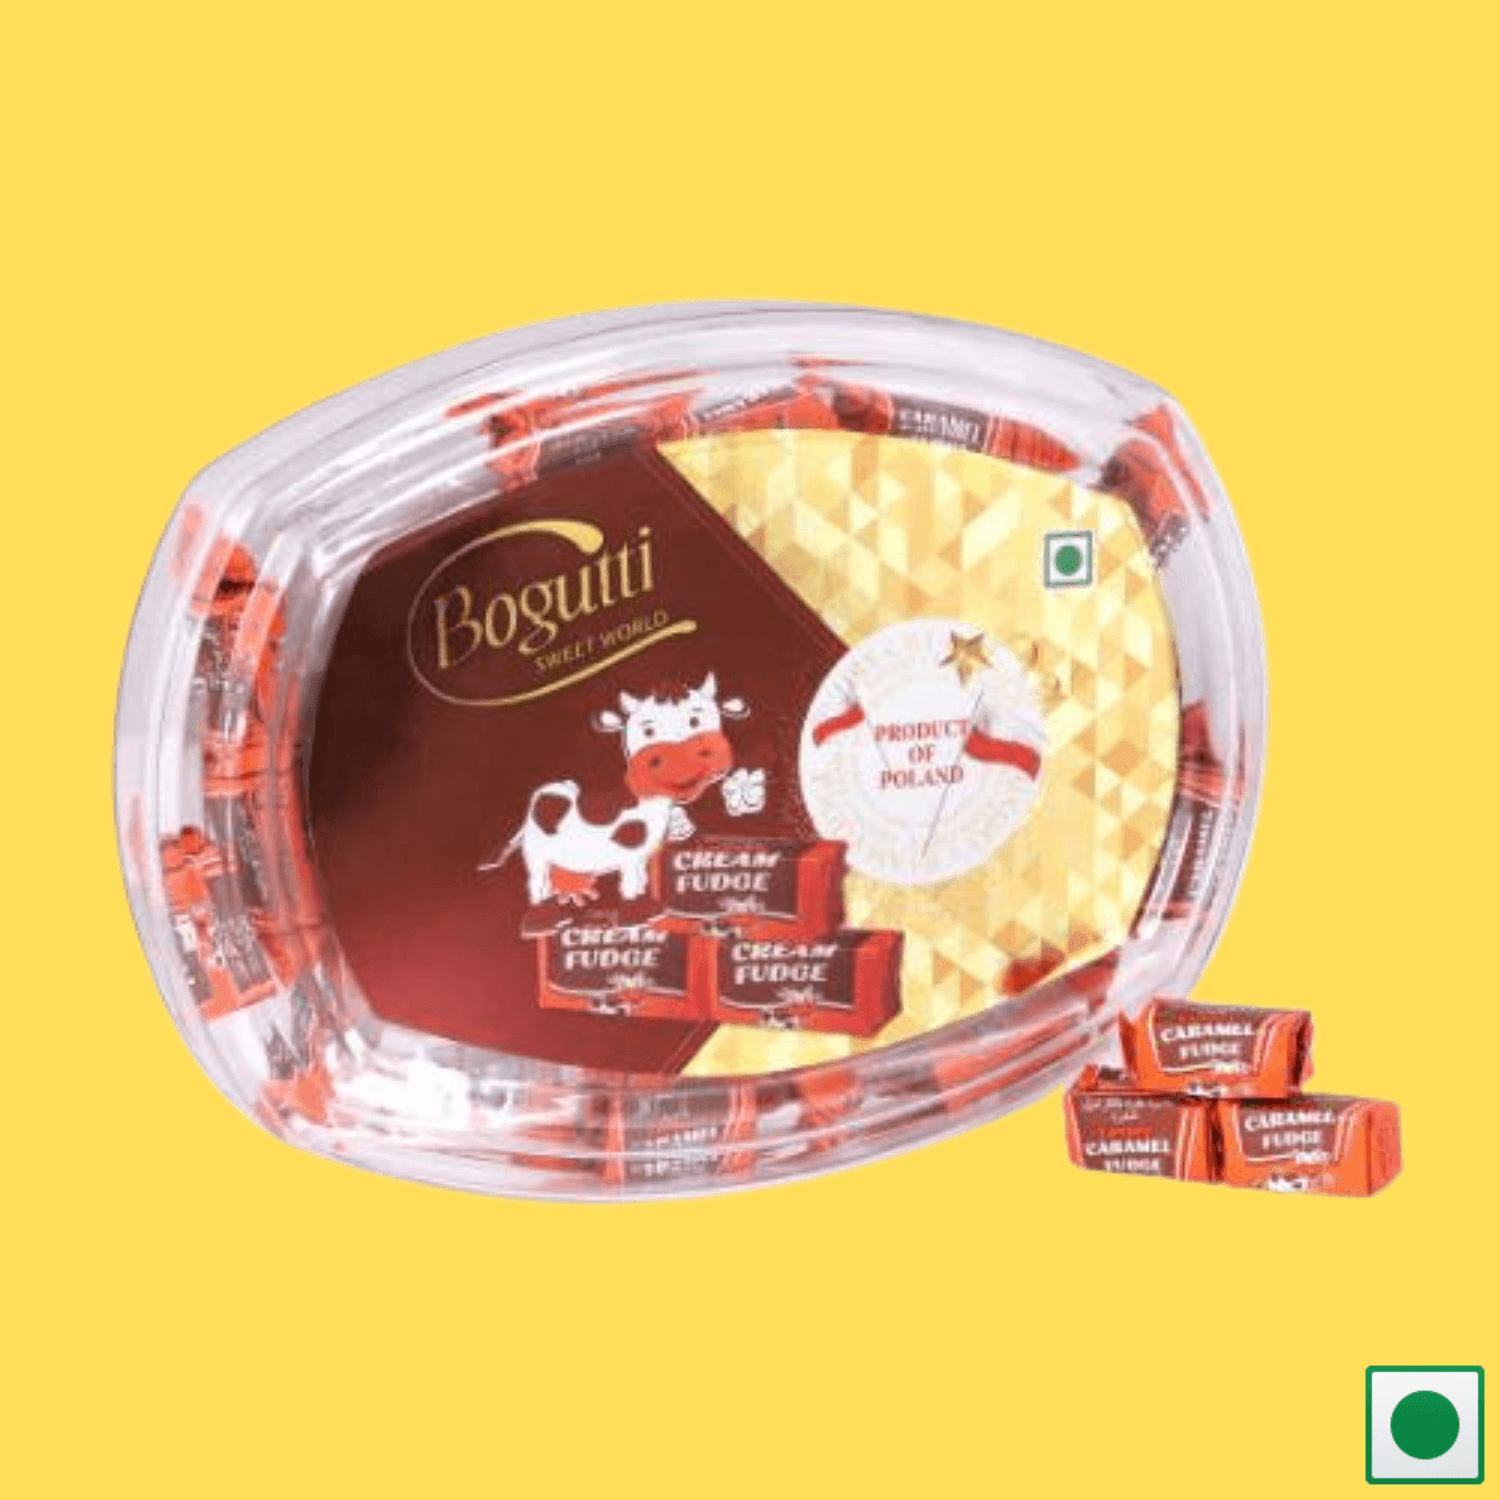 Bogutti Cream Fudge Exclusive CP 800 Shape Gift Pack, 350g (Imported) - Super 7 Mart